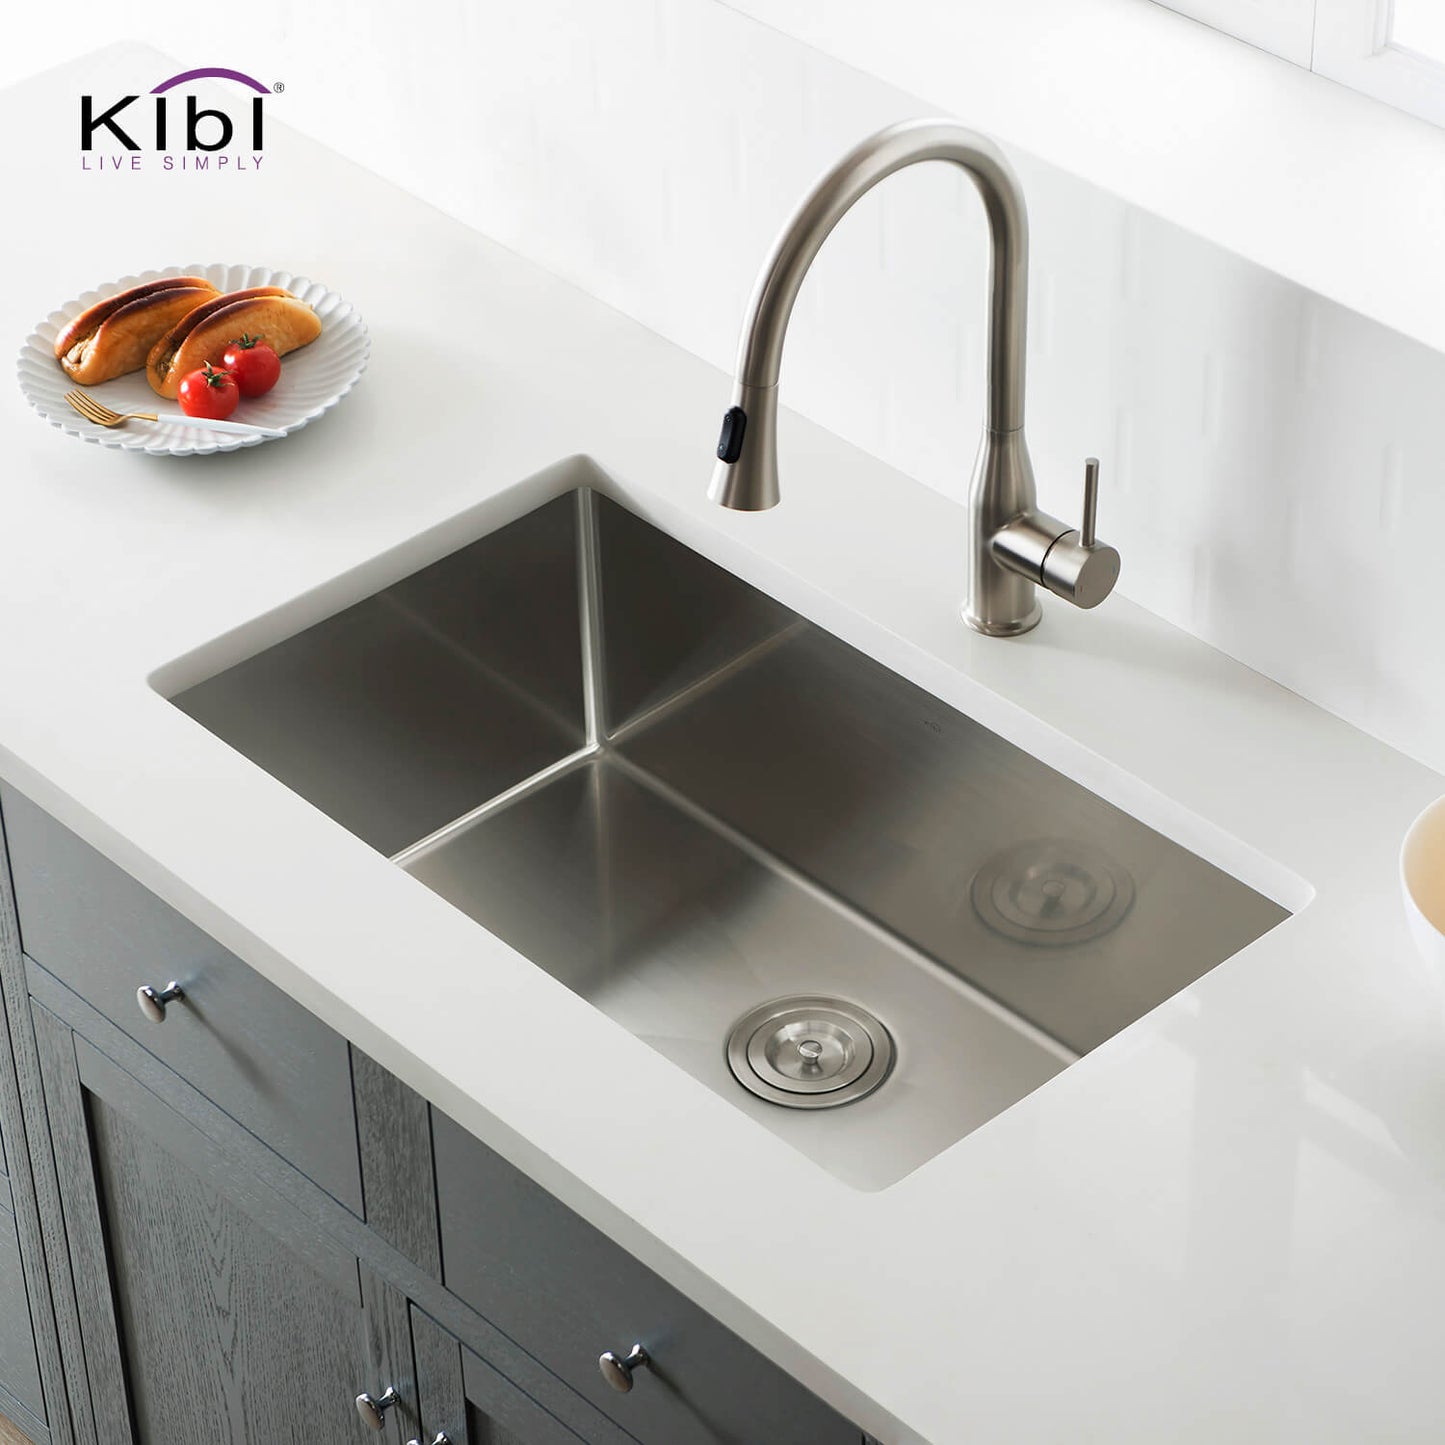 Kibi 30" x 18" x 10" Handcrafted Undermount Single Bowl Kitchen Sink With Satin Finish